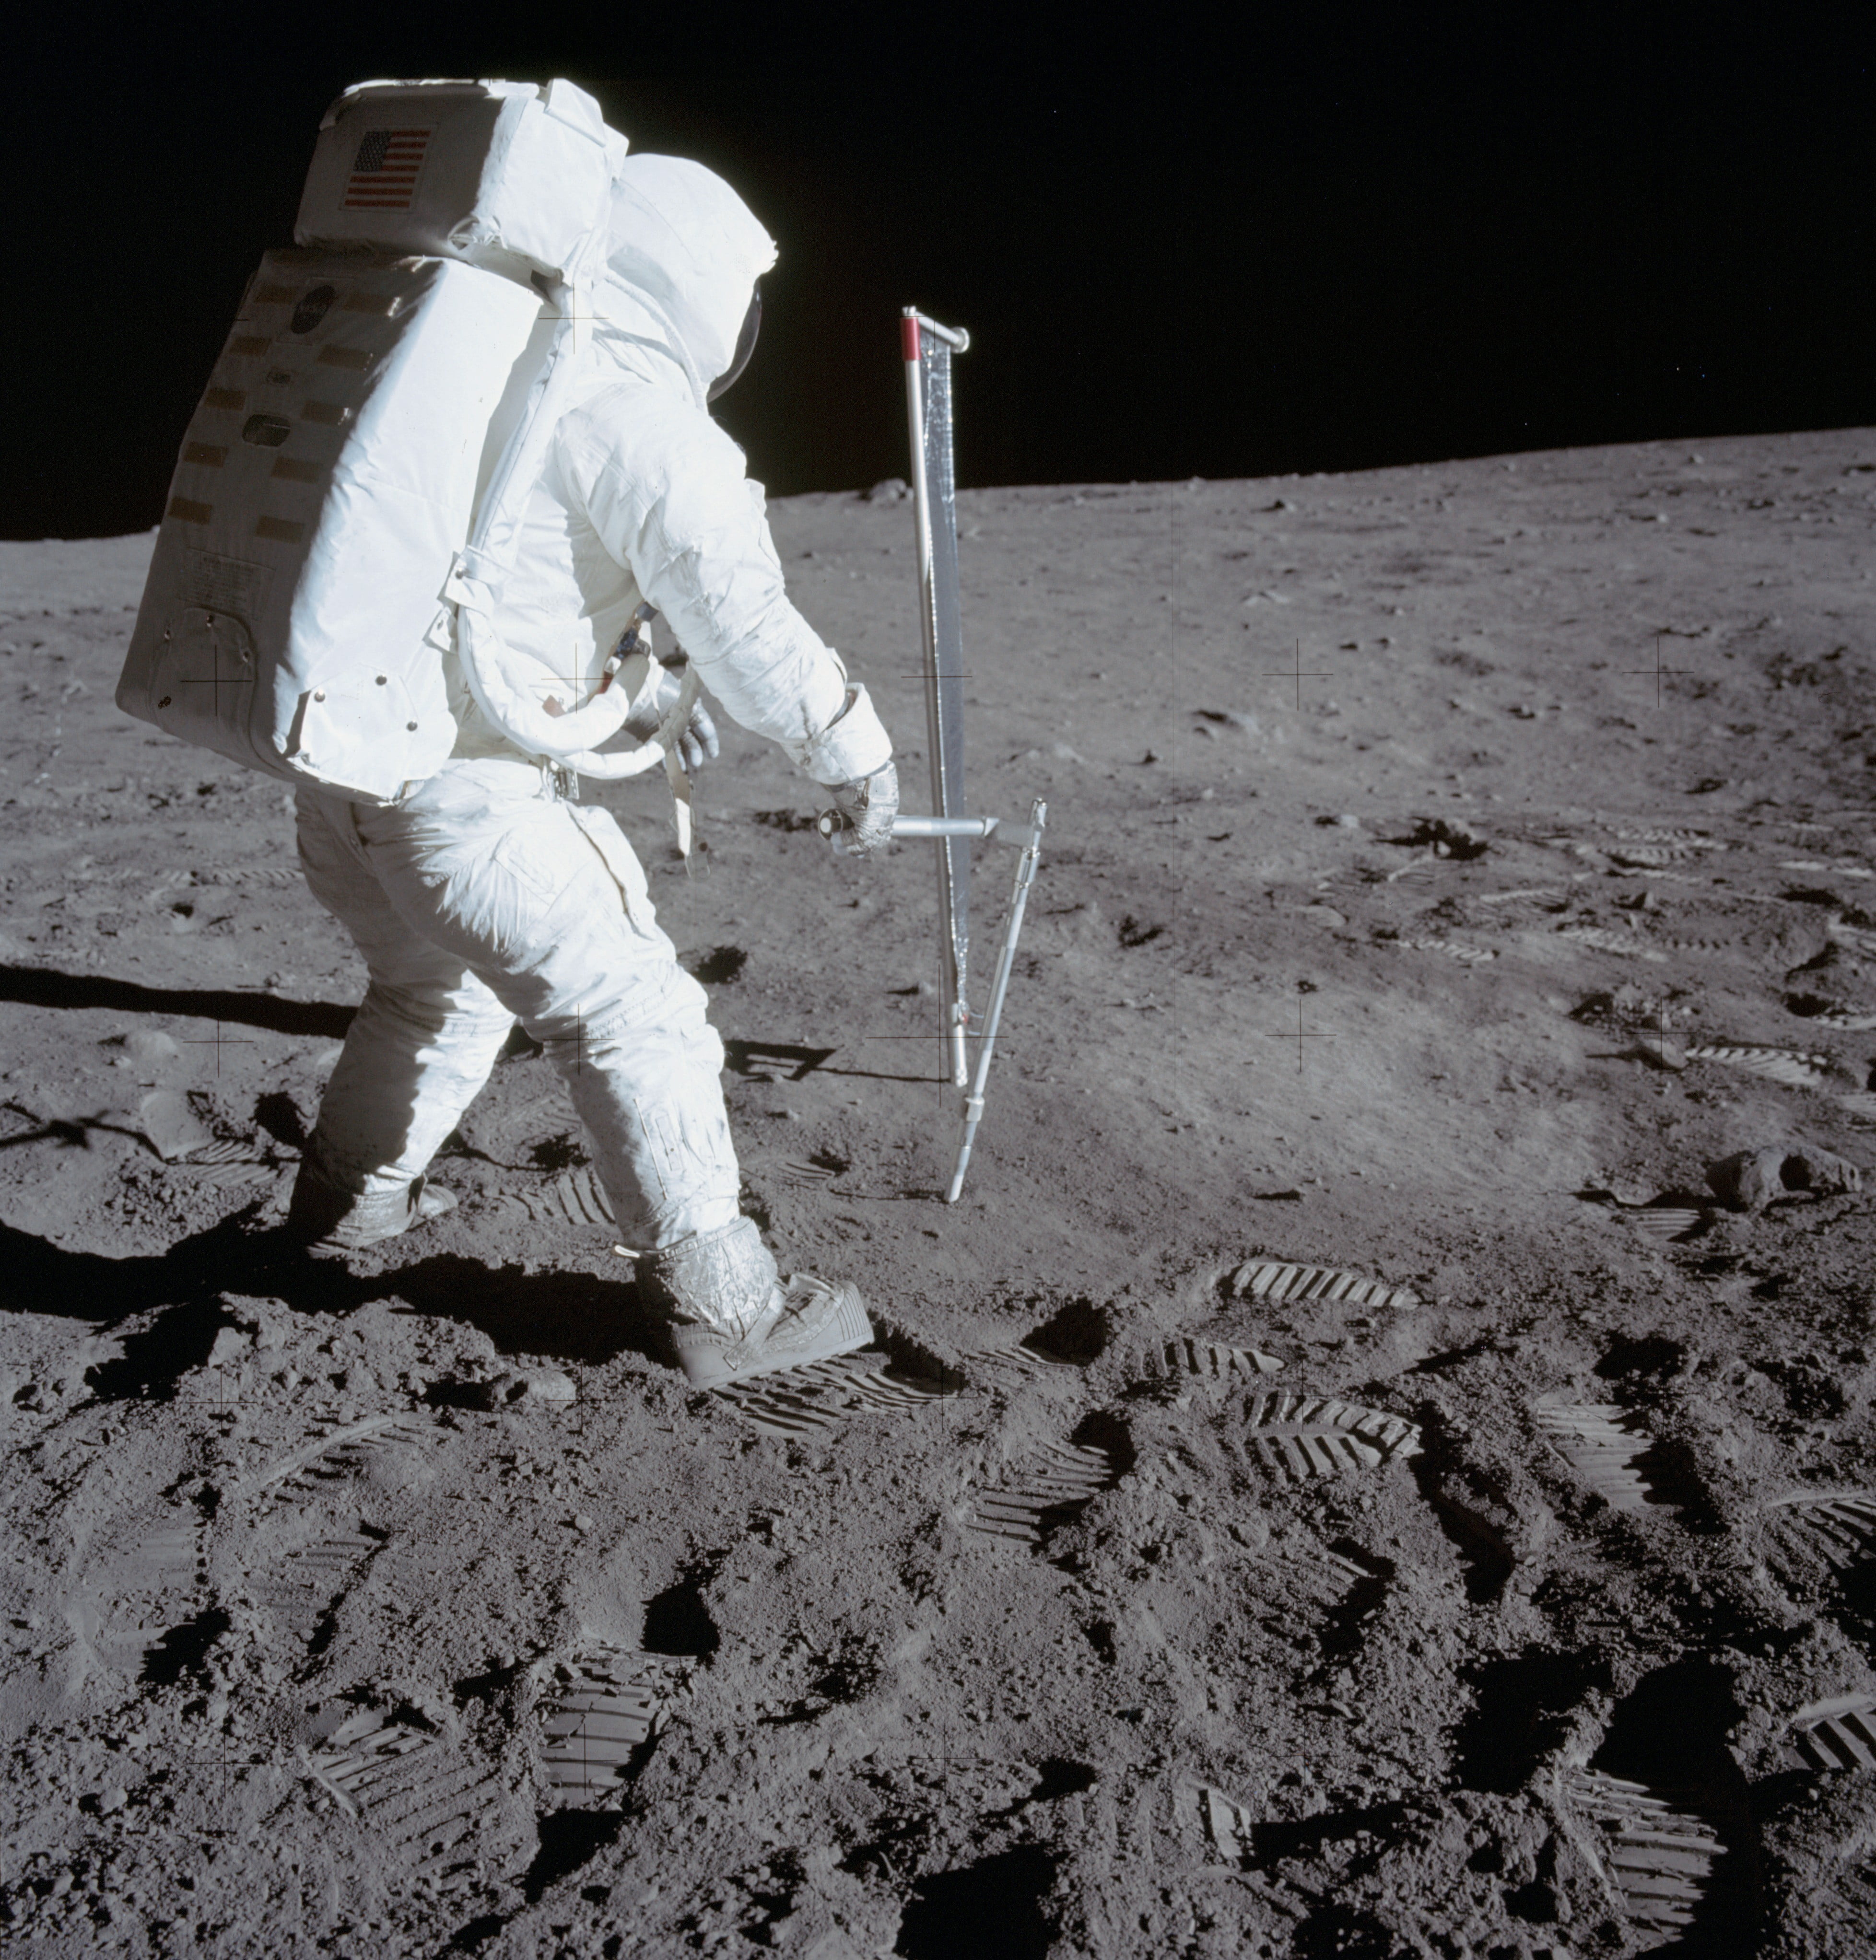 Armstrong on the moon. Аполлон 11. Апполо 11 на Луне.